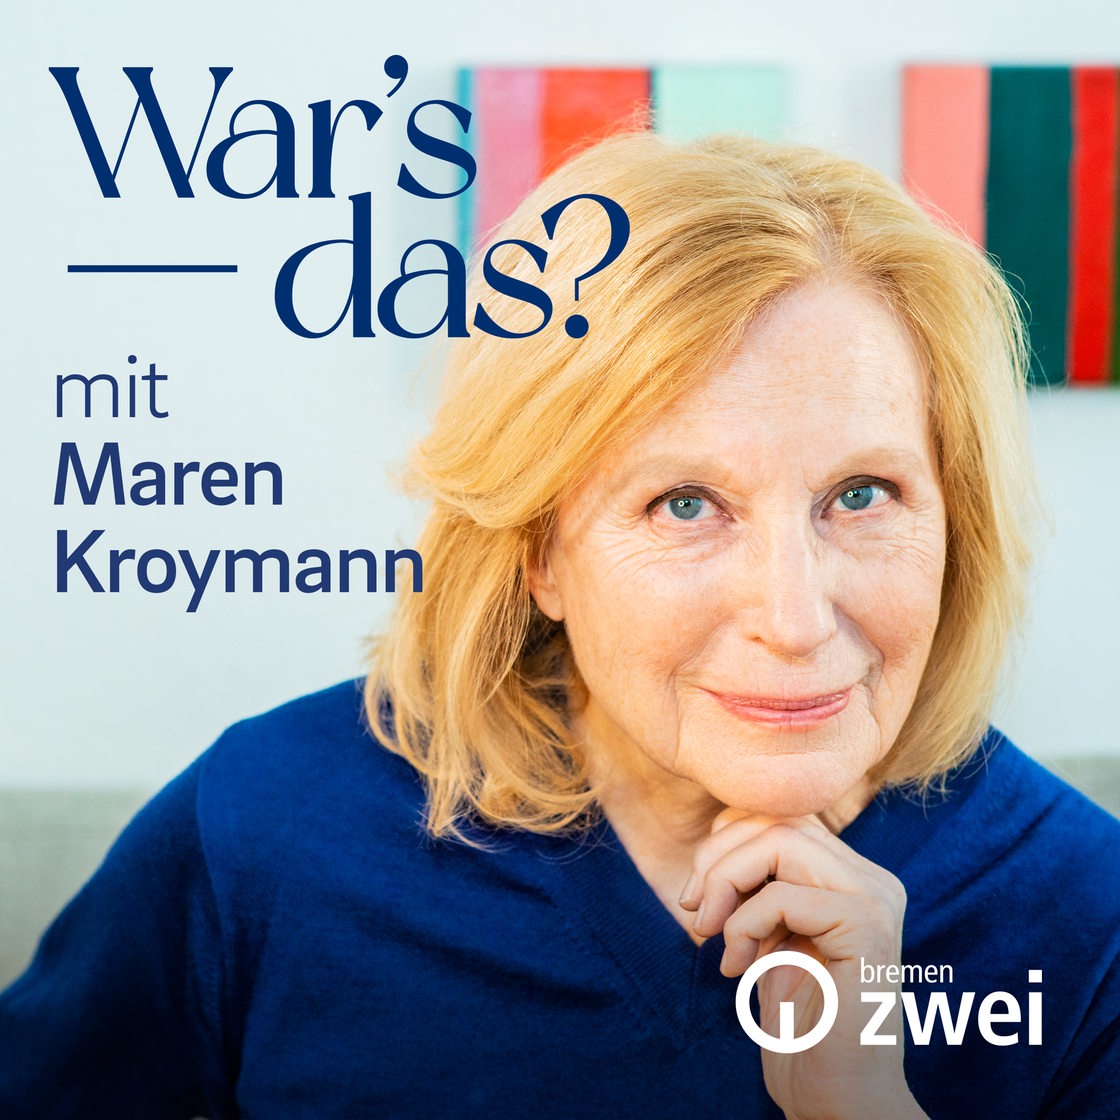 Maren Kroymann mit dem Schriftzug "War's das?"